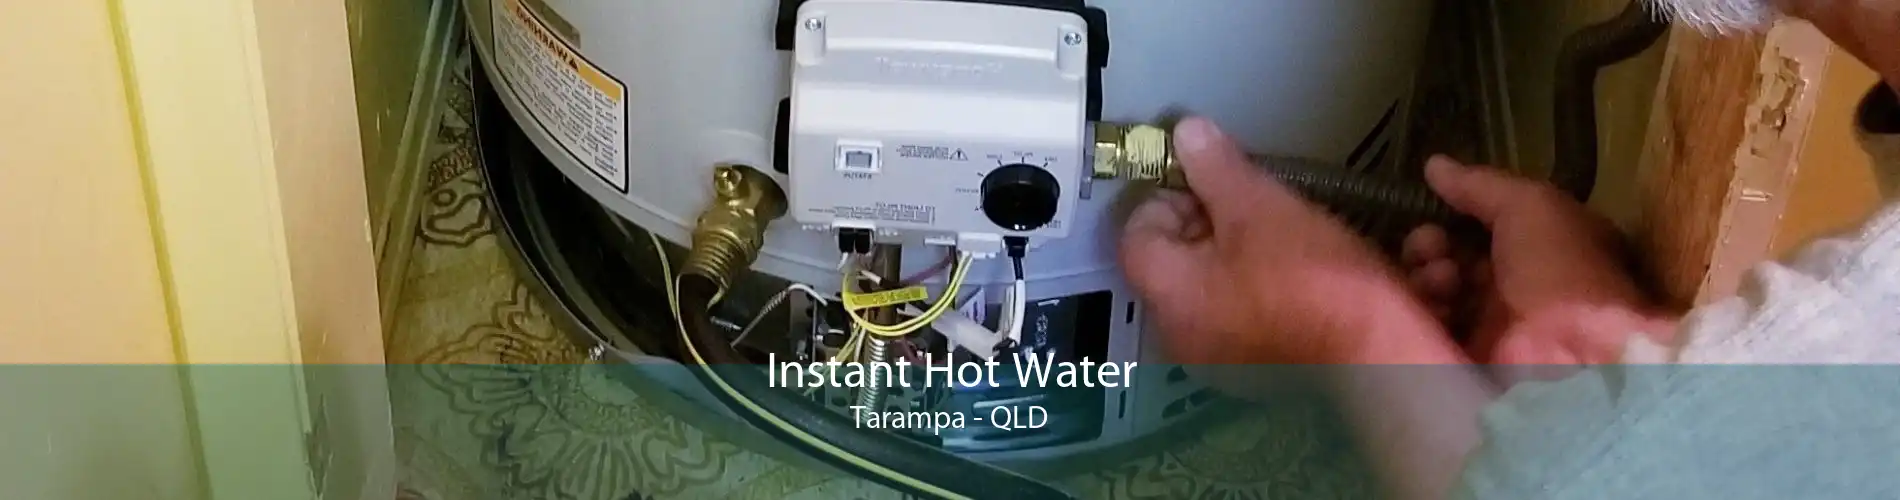 Instant Hot Water Tarampa - QLD